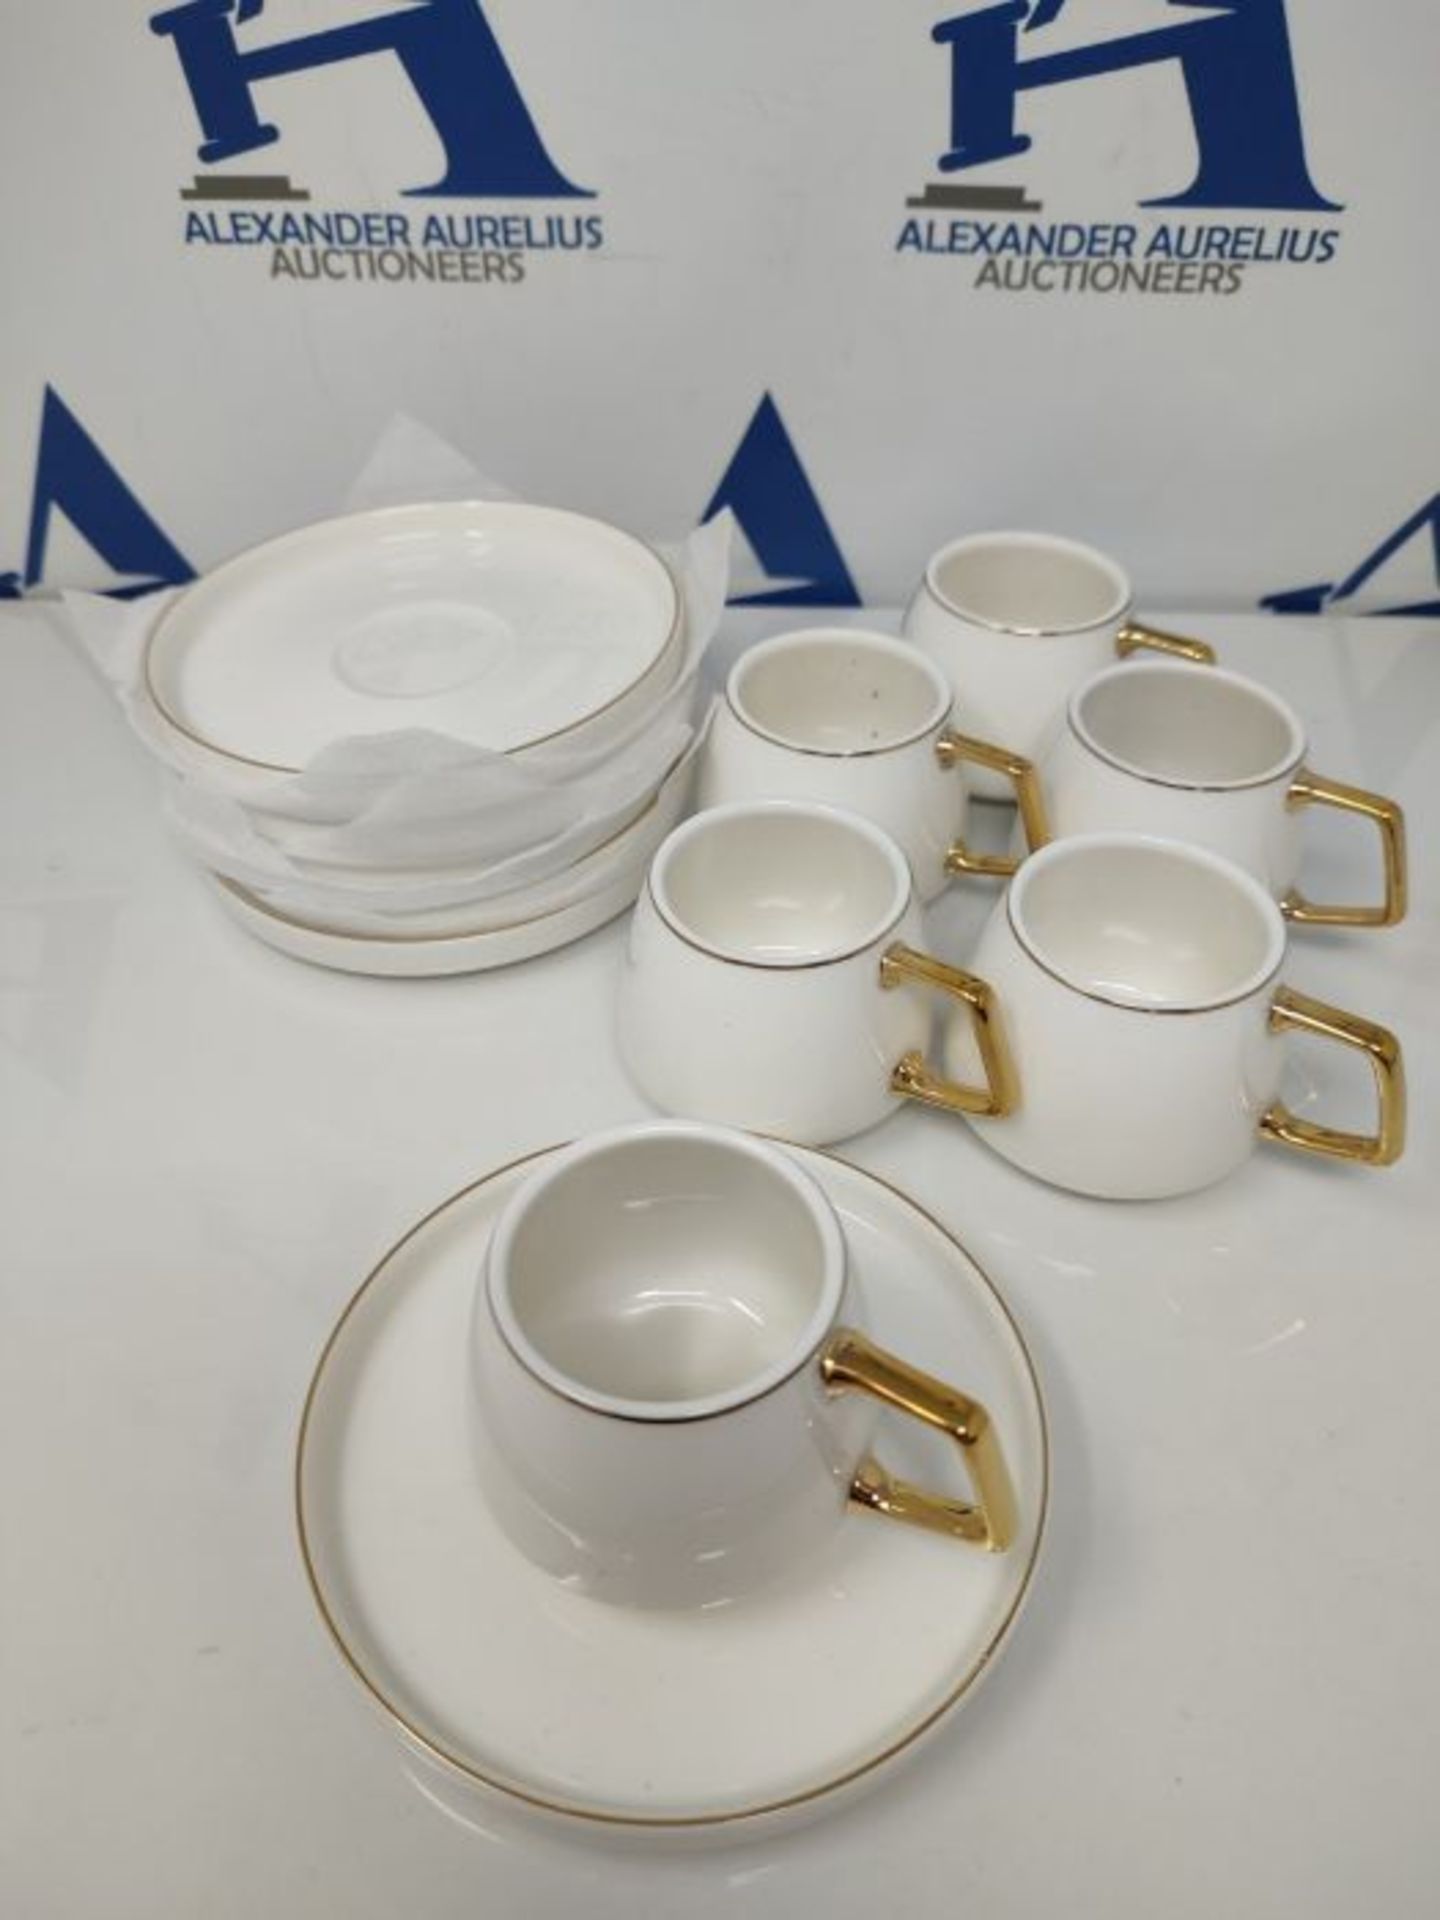 KARACA Saturn Turkish Coffee Cups, Espresso Cups Set of 6 Includes 6 Pieces, 3 oz Espr - Image 3 of 3